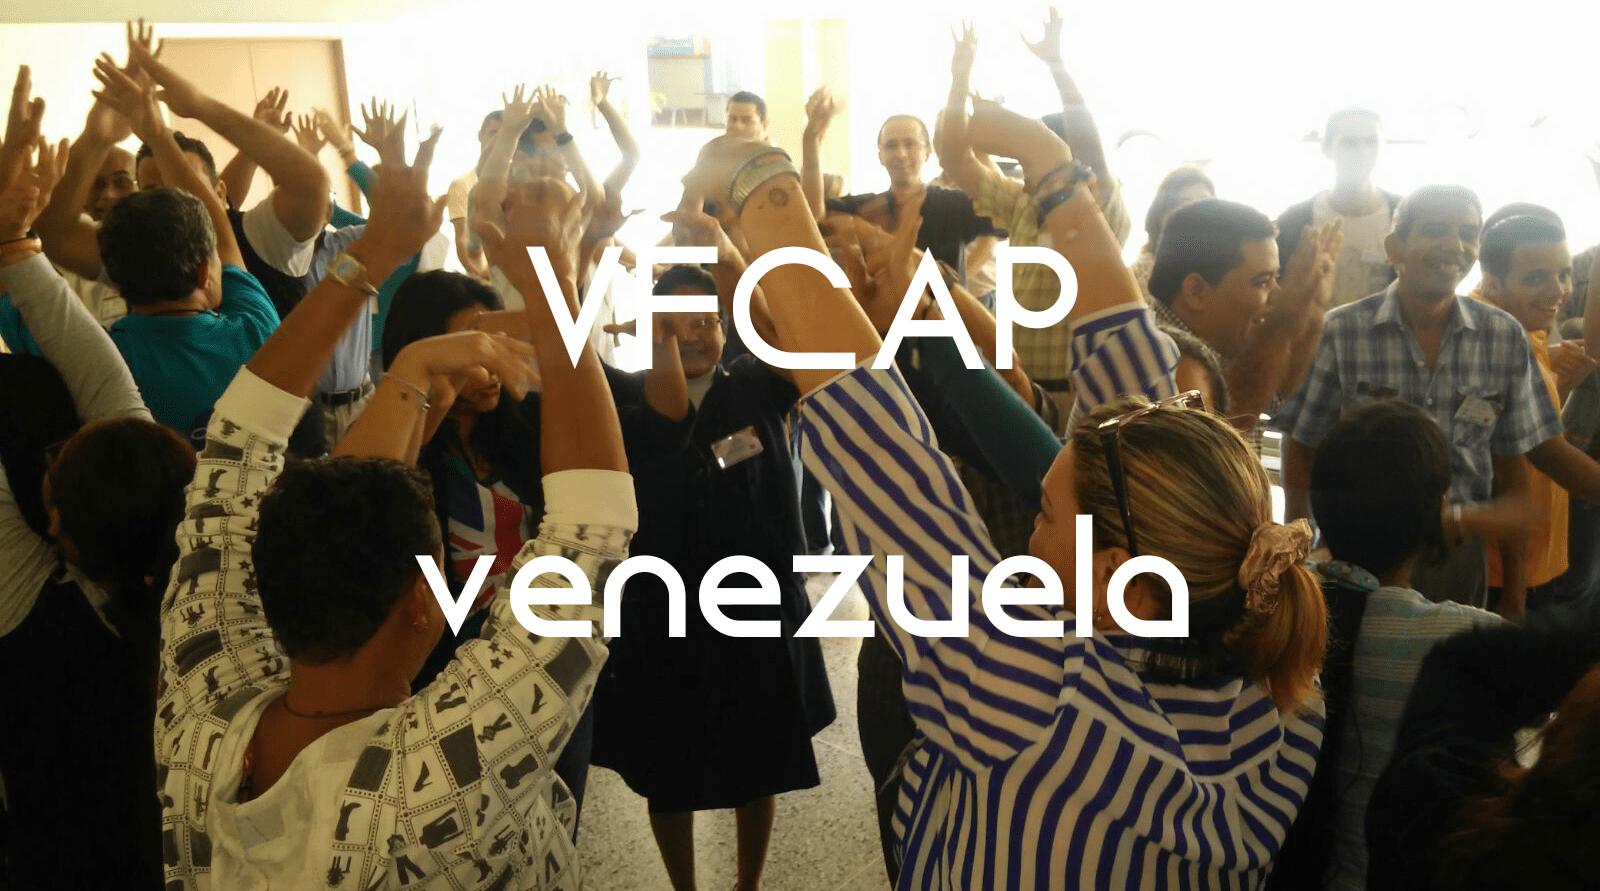 VFCAP Venezuela